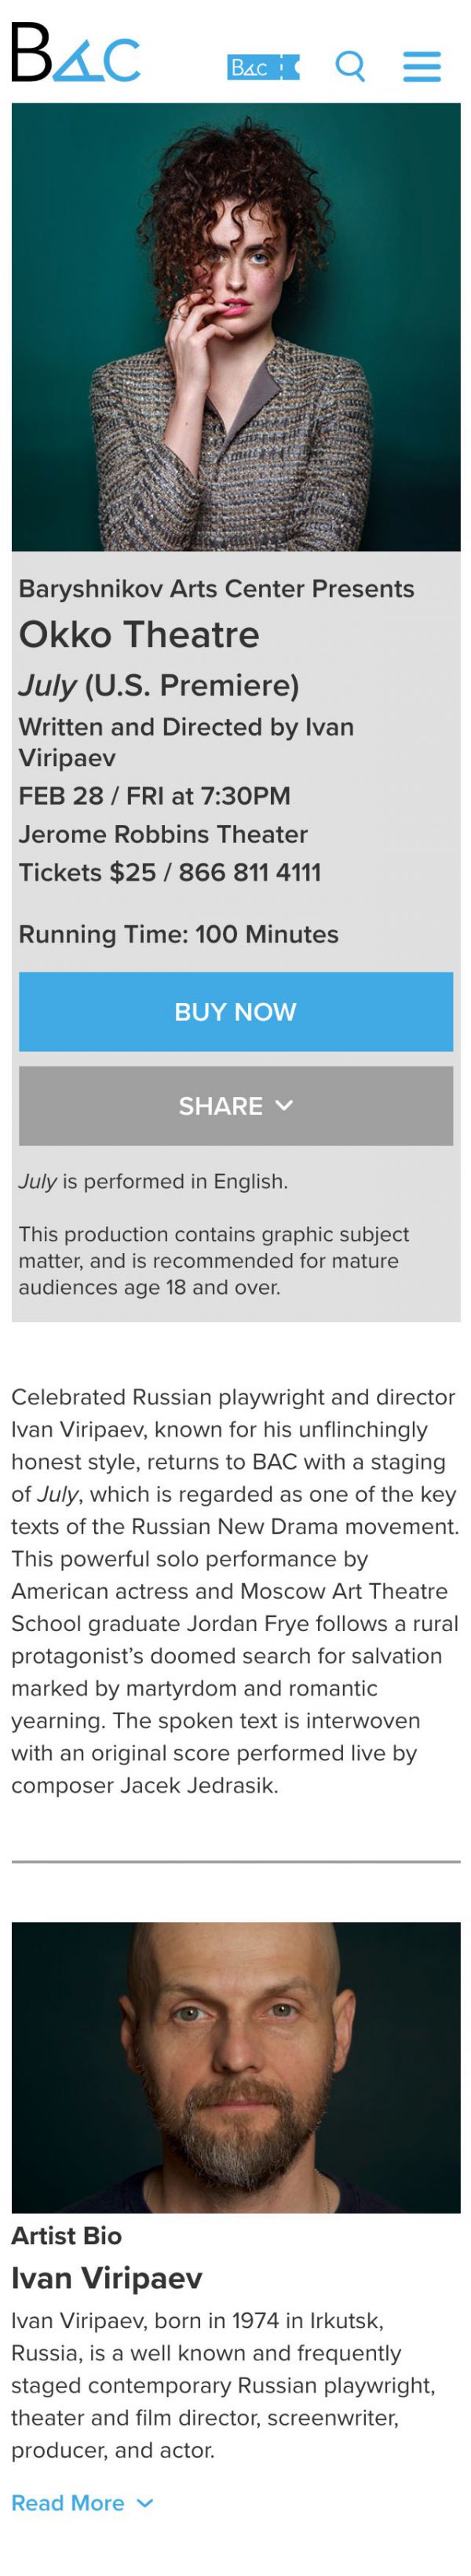 Screenshot of a Baryshnikov Arts Center website's performance page